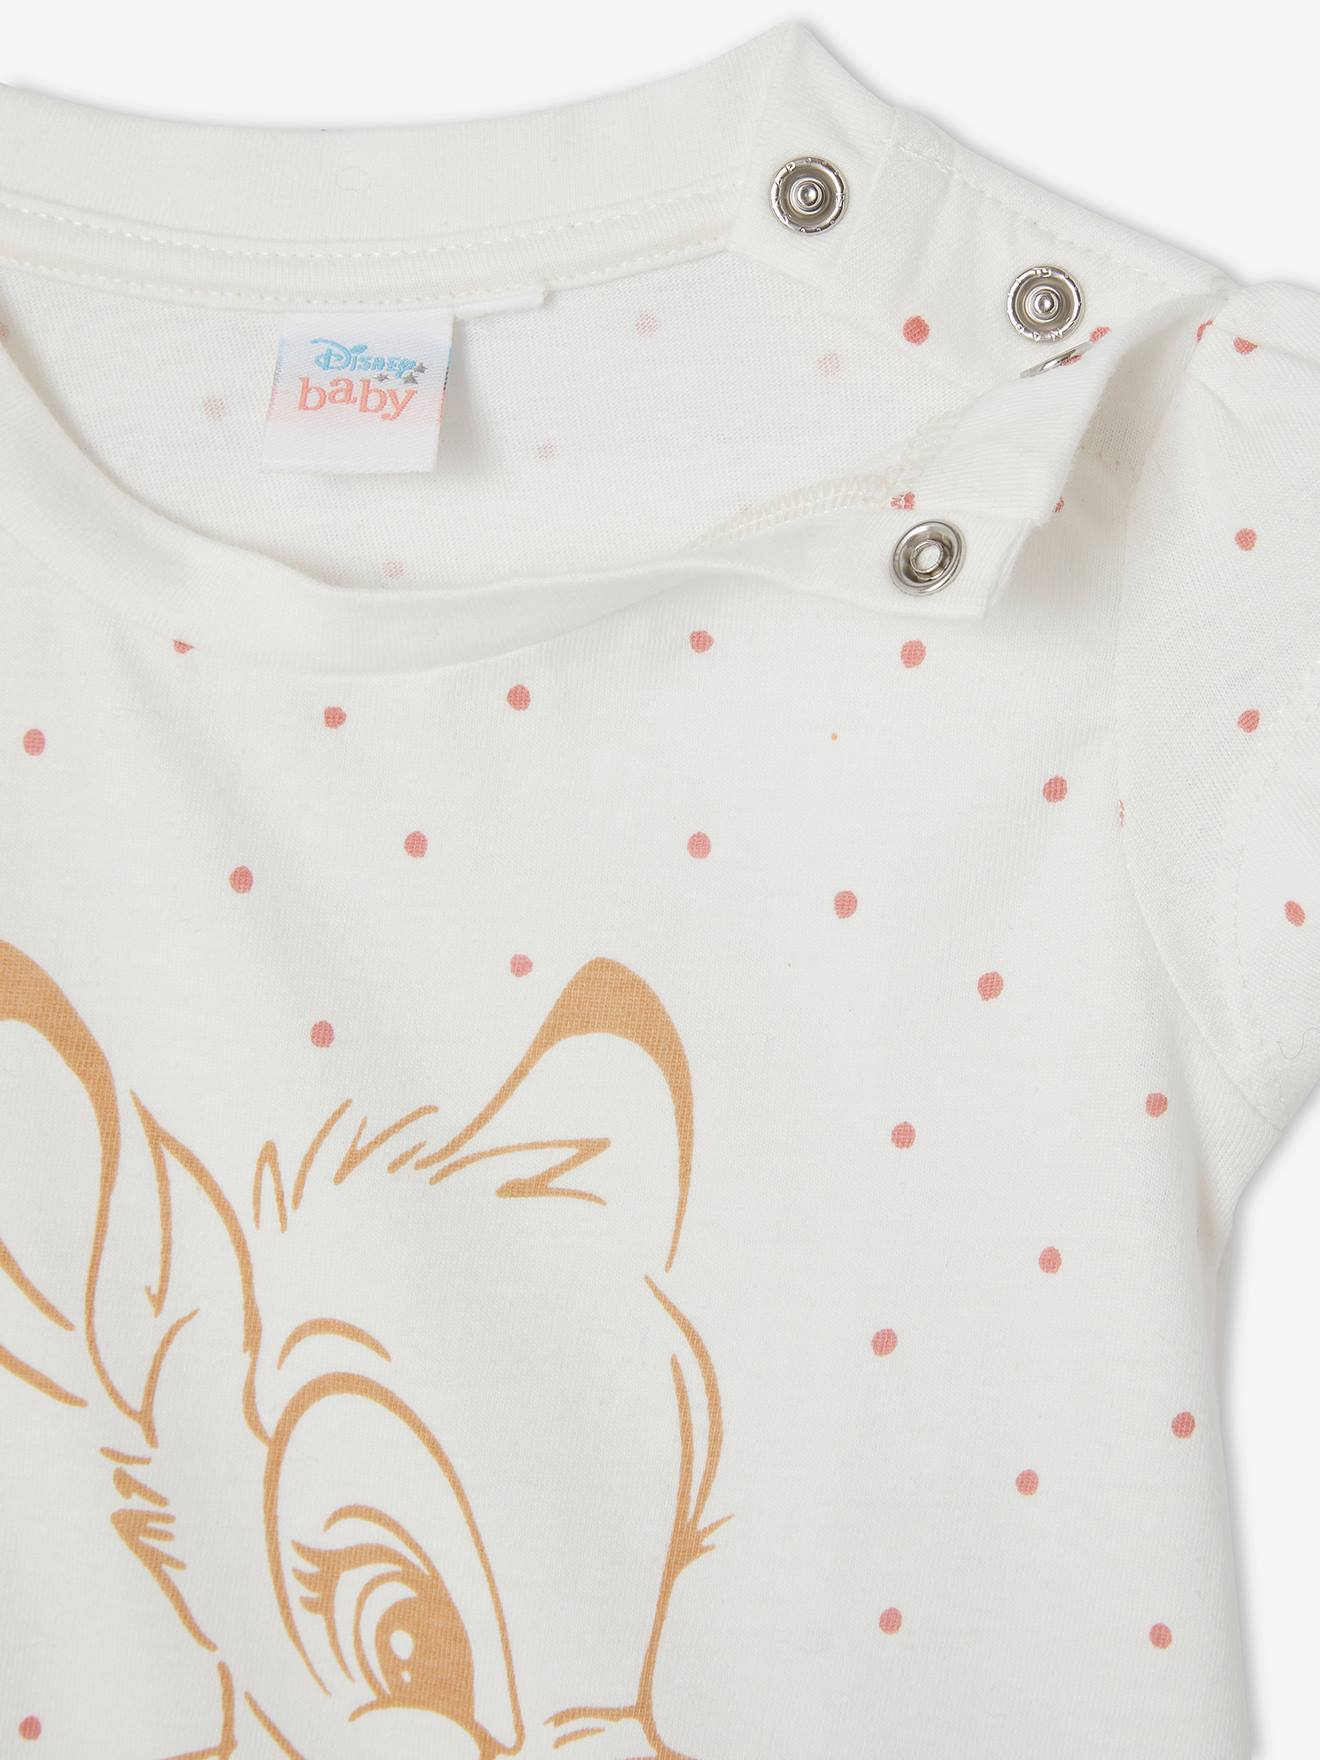 Mädchen Baby T-Shirt Disney - weiß BAMBI Baby bedruckt